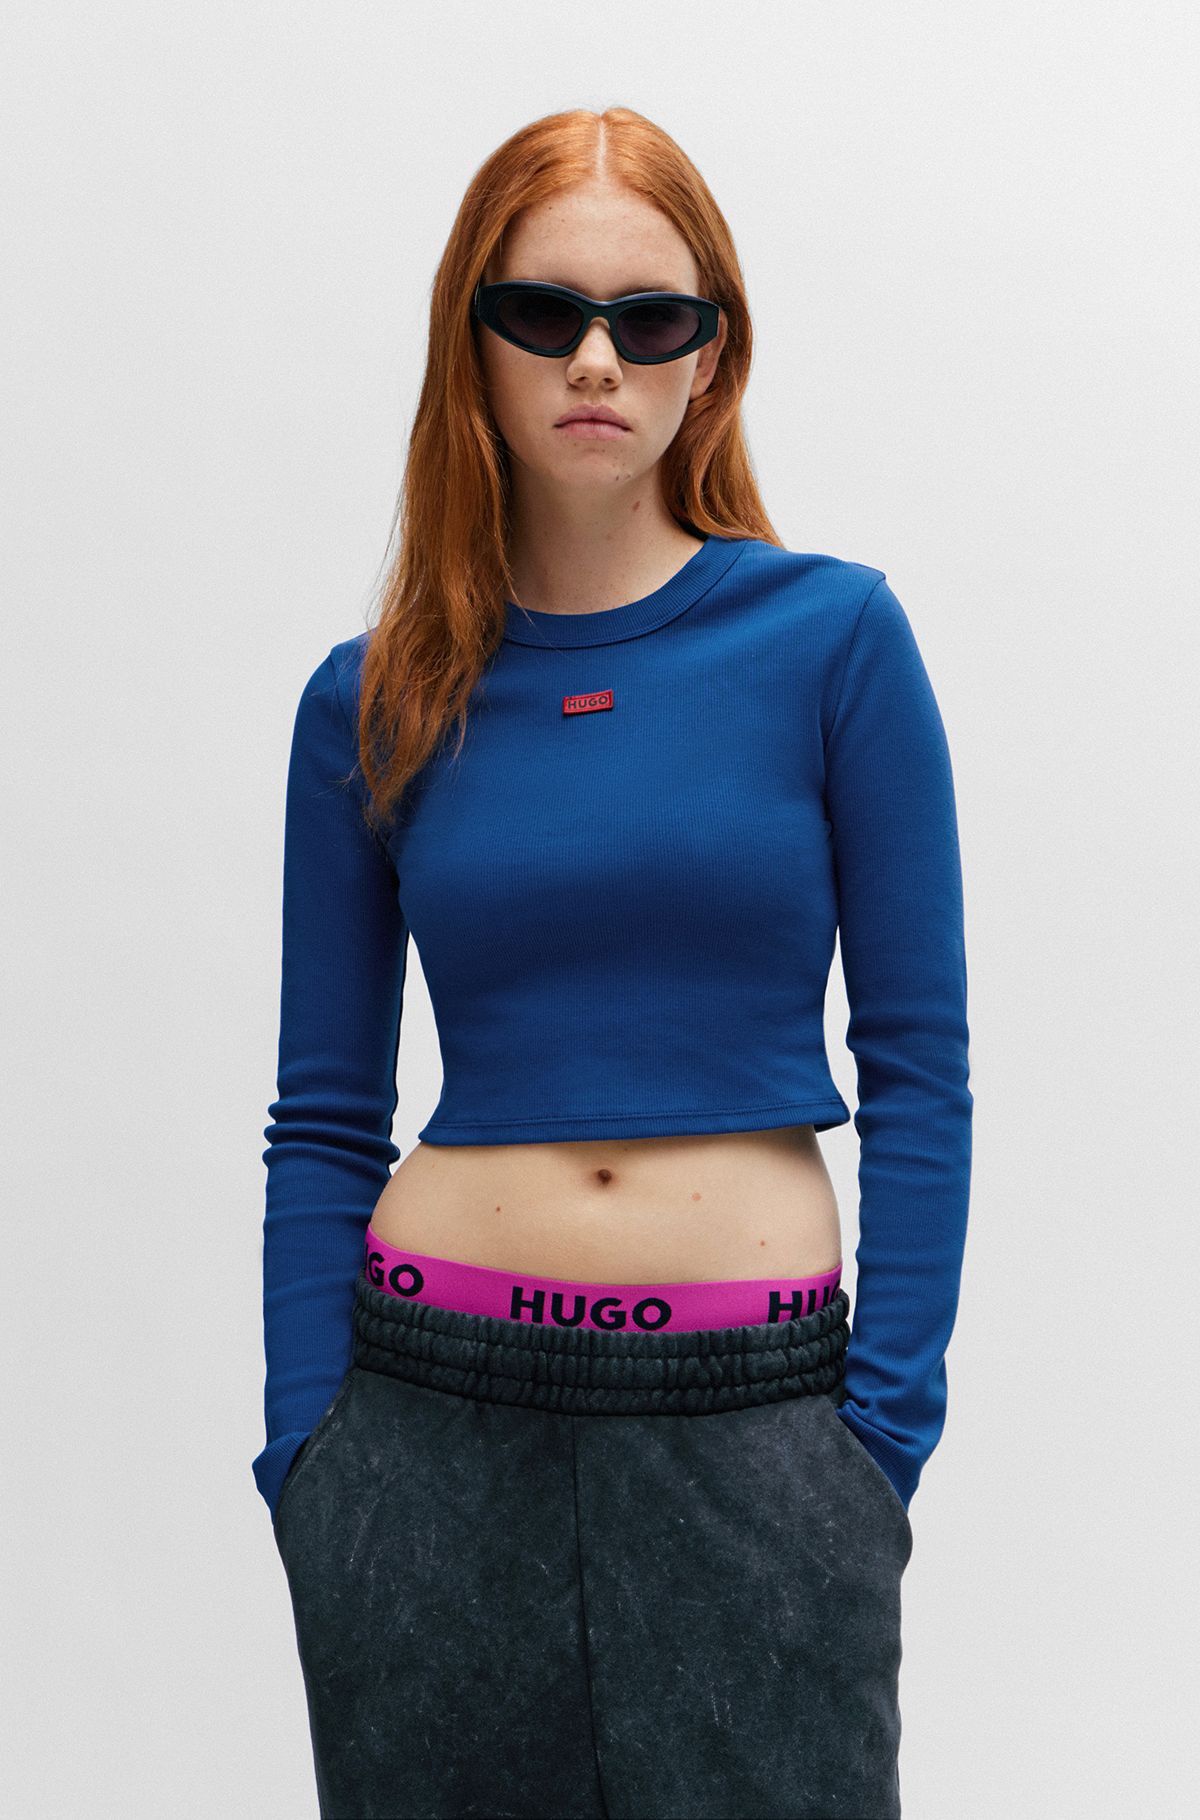 T-shirts by HUGO Fashion Blue BOSS for Women